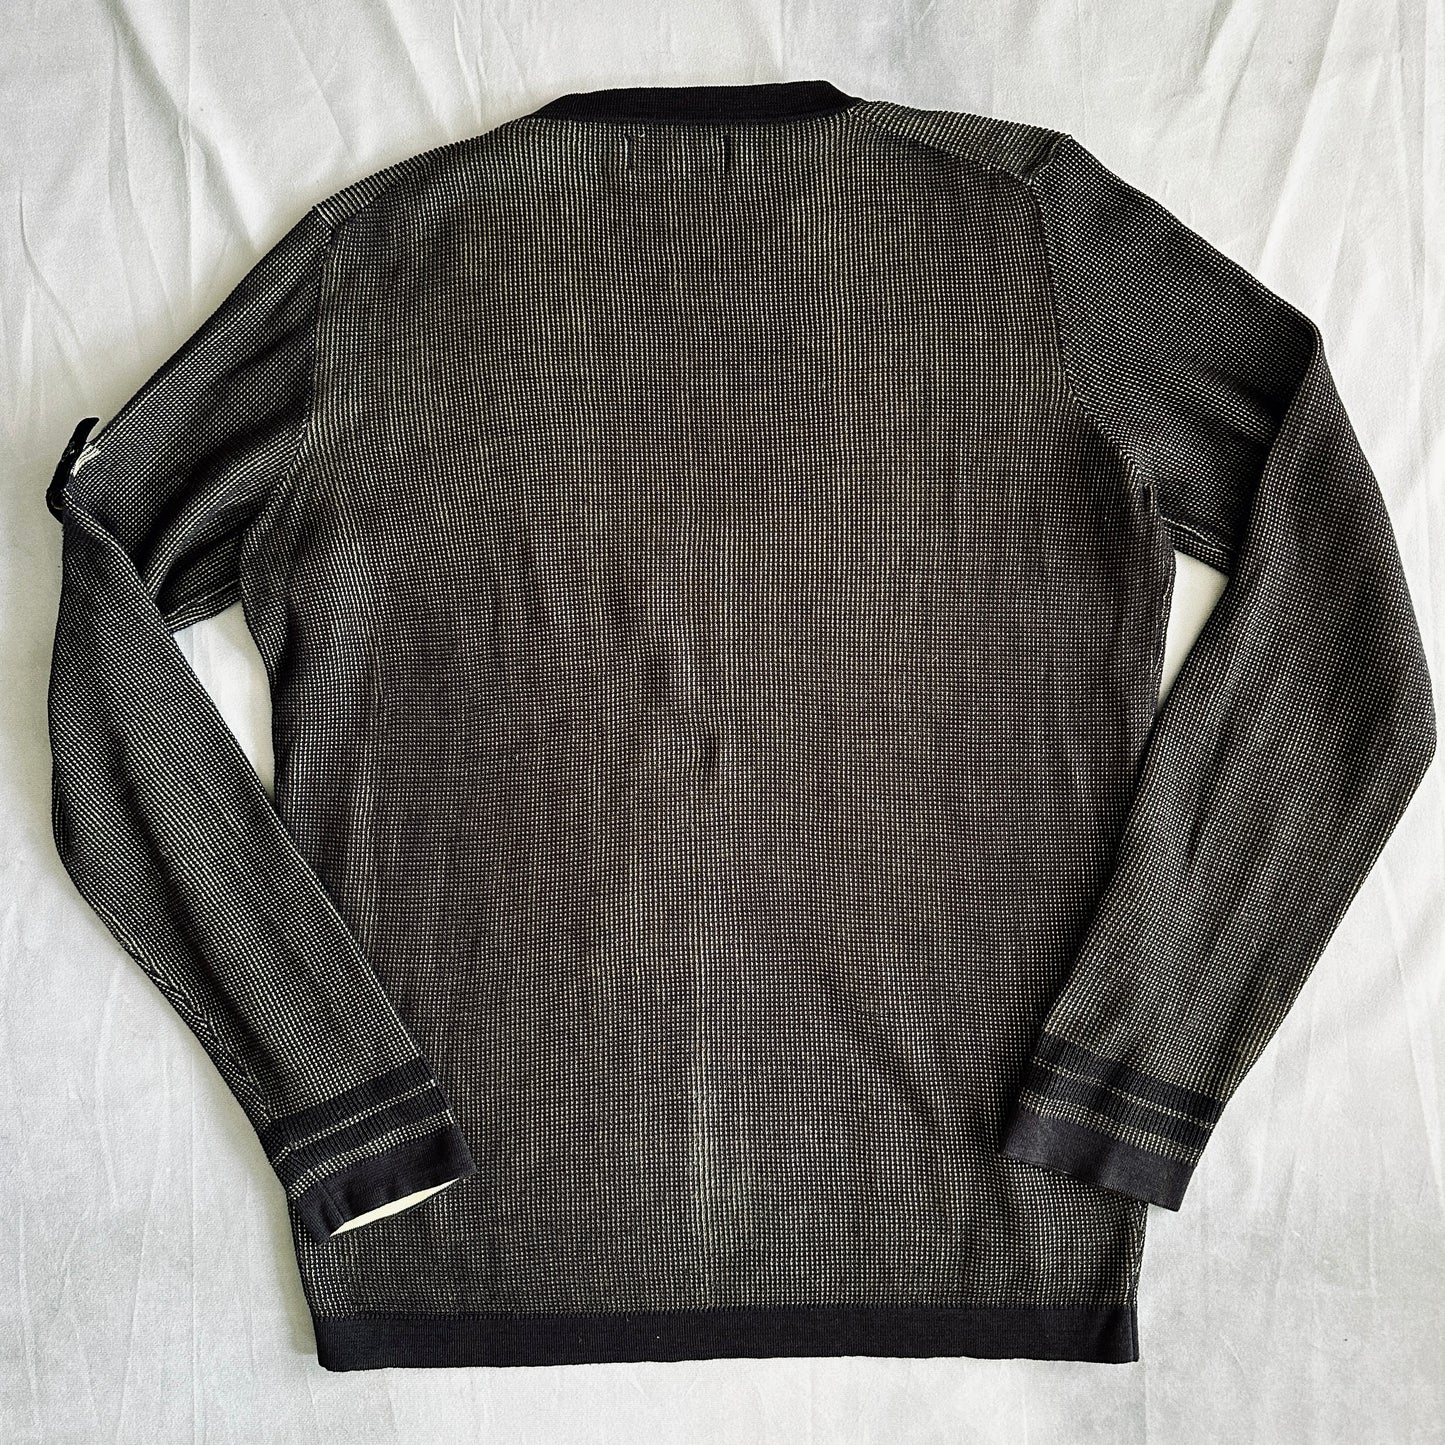 Stone Island Iridescent Two Tone Waffle Knit Crewneck Sweatshirt - M - Made in Italy